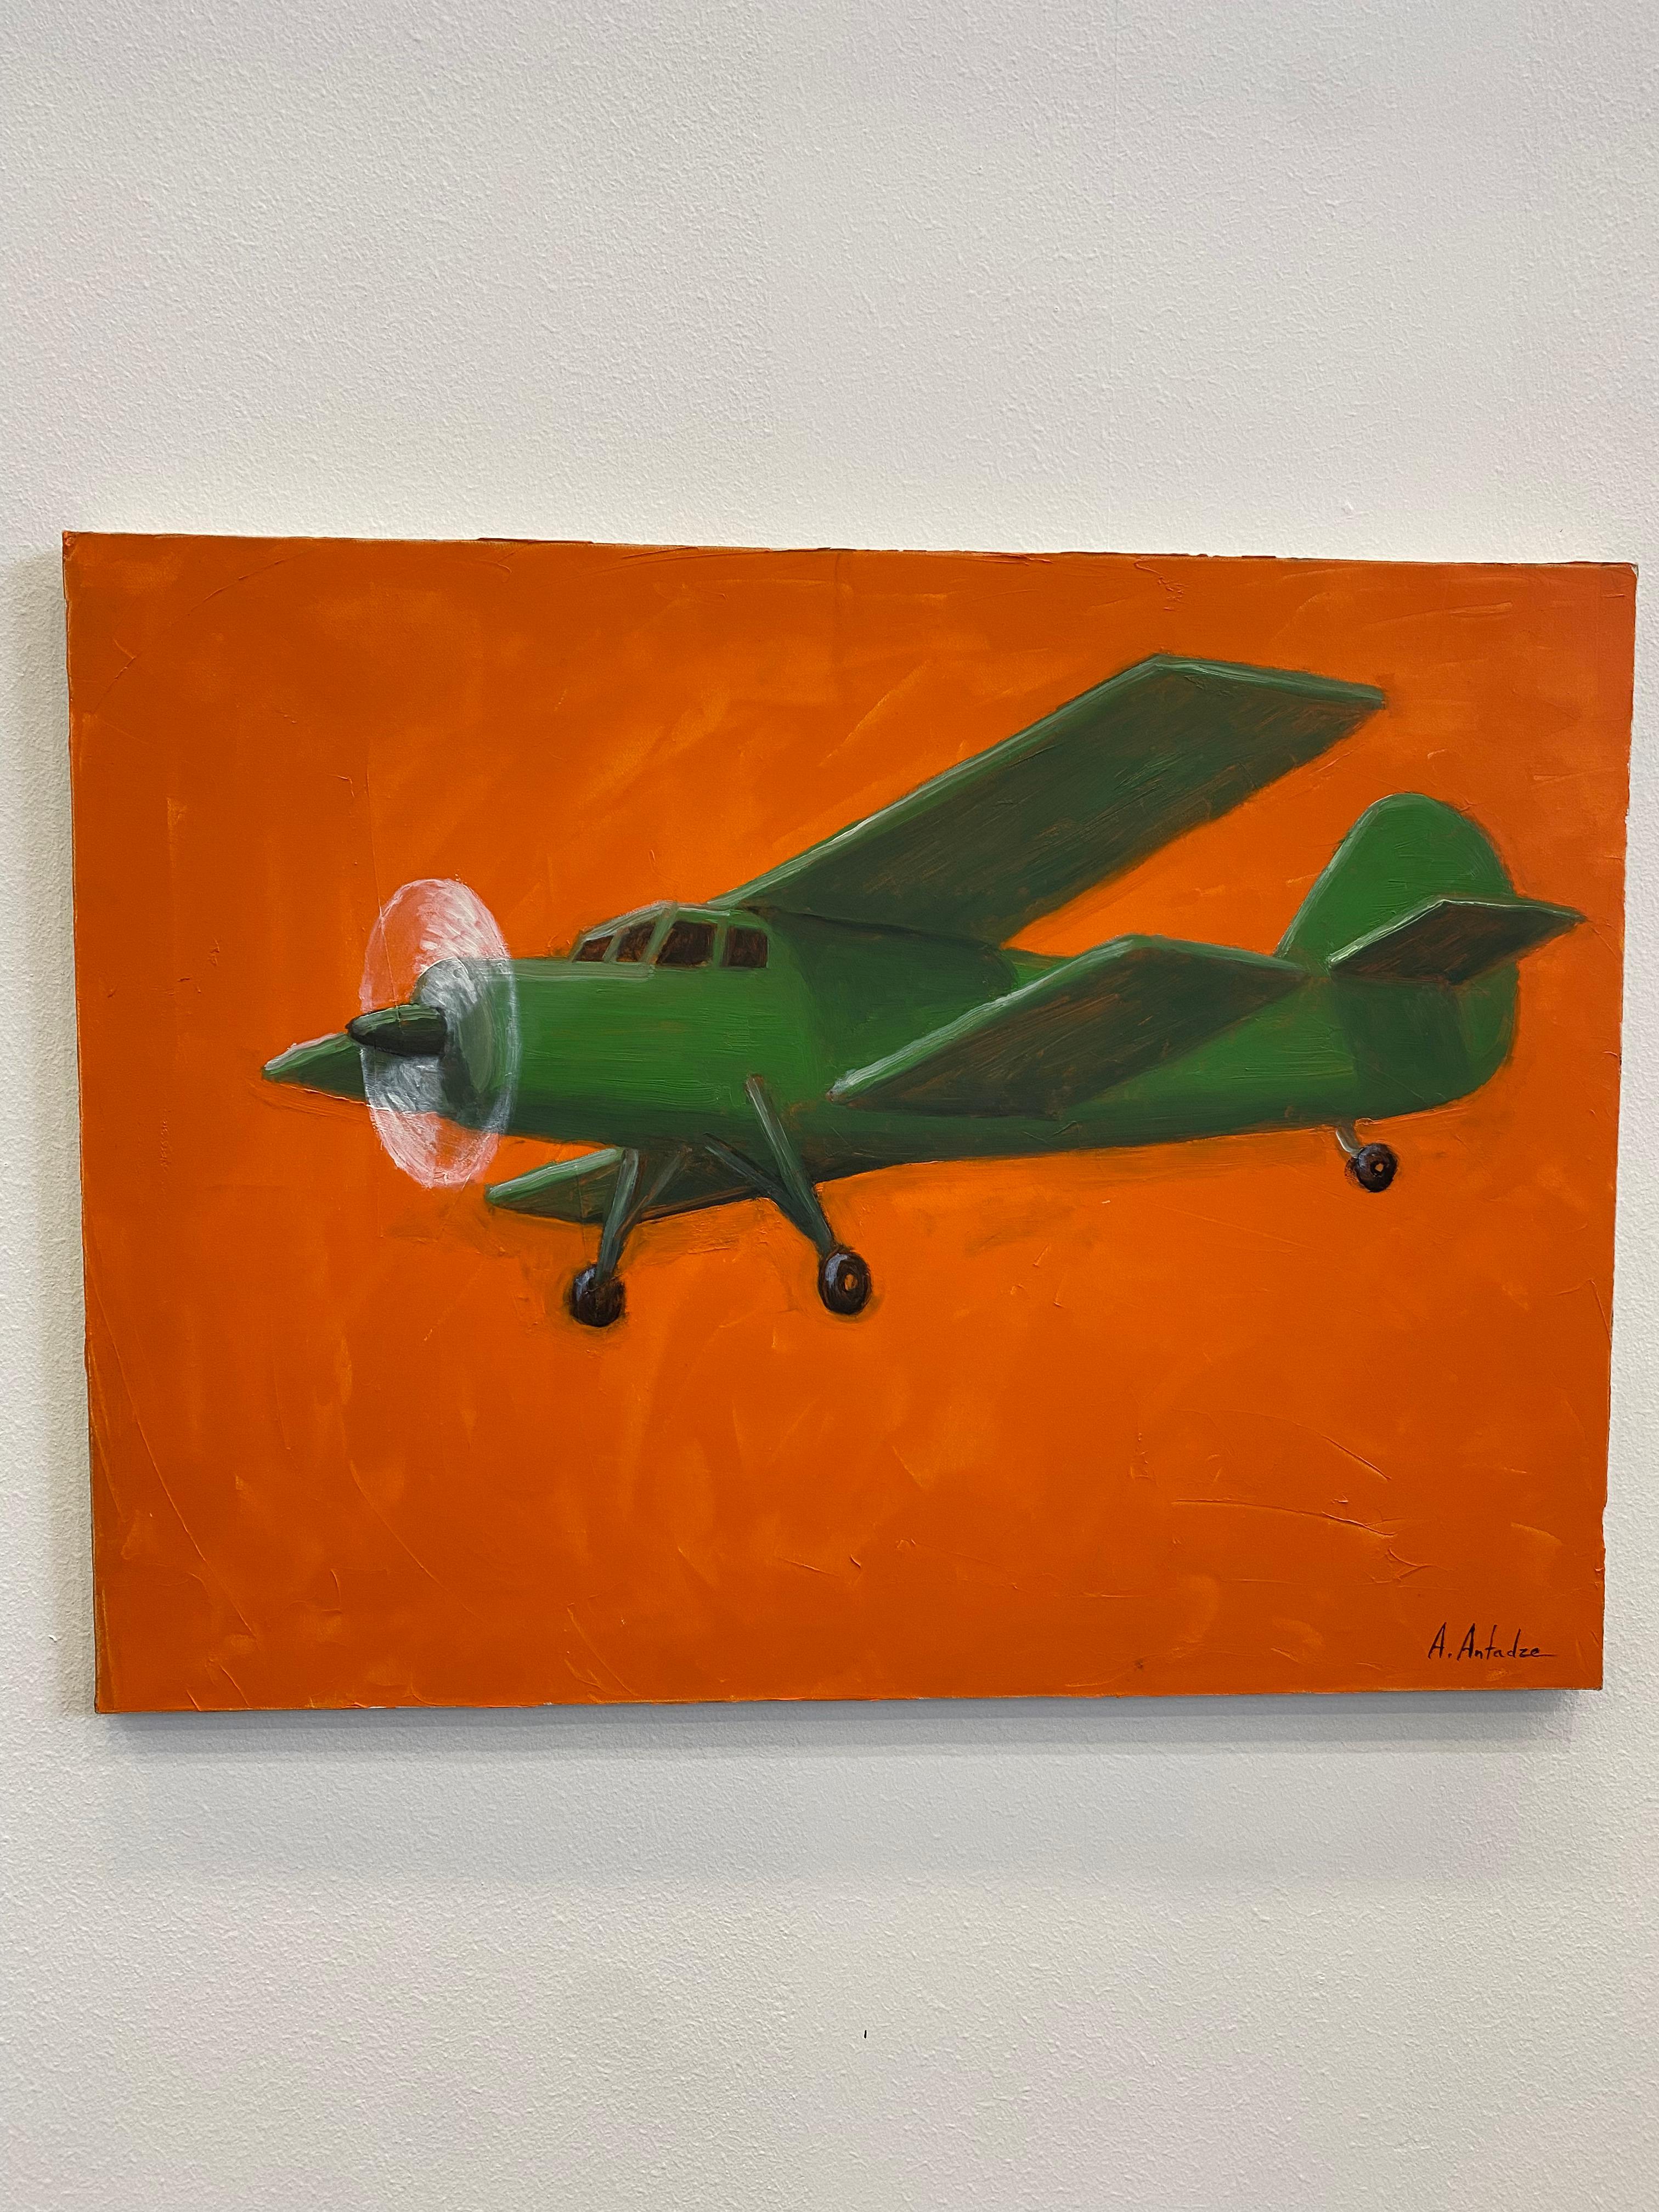 Georgian Contemporary Art by Alexander Sandro Antadze - Green Plane For Sale 1